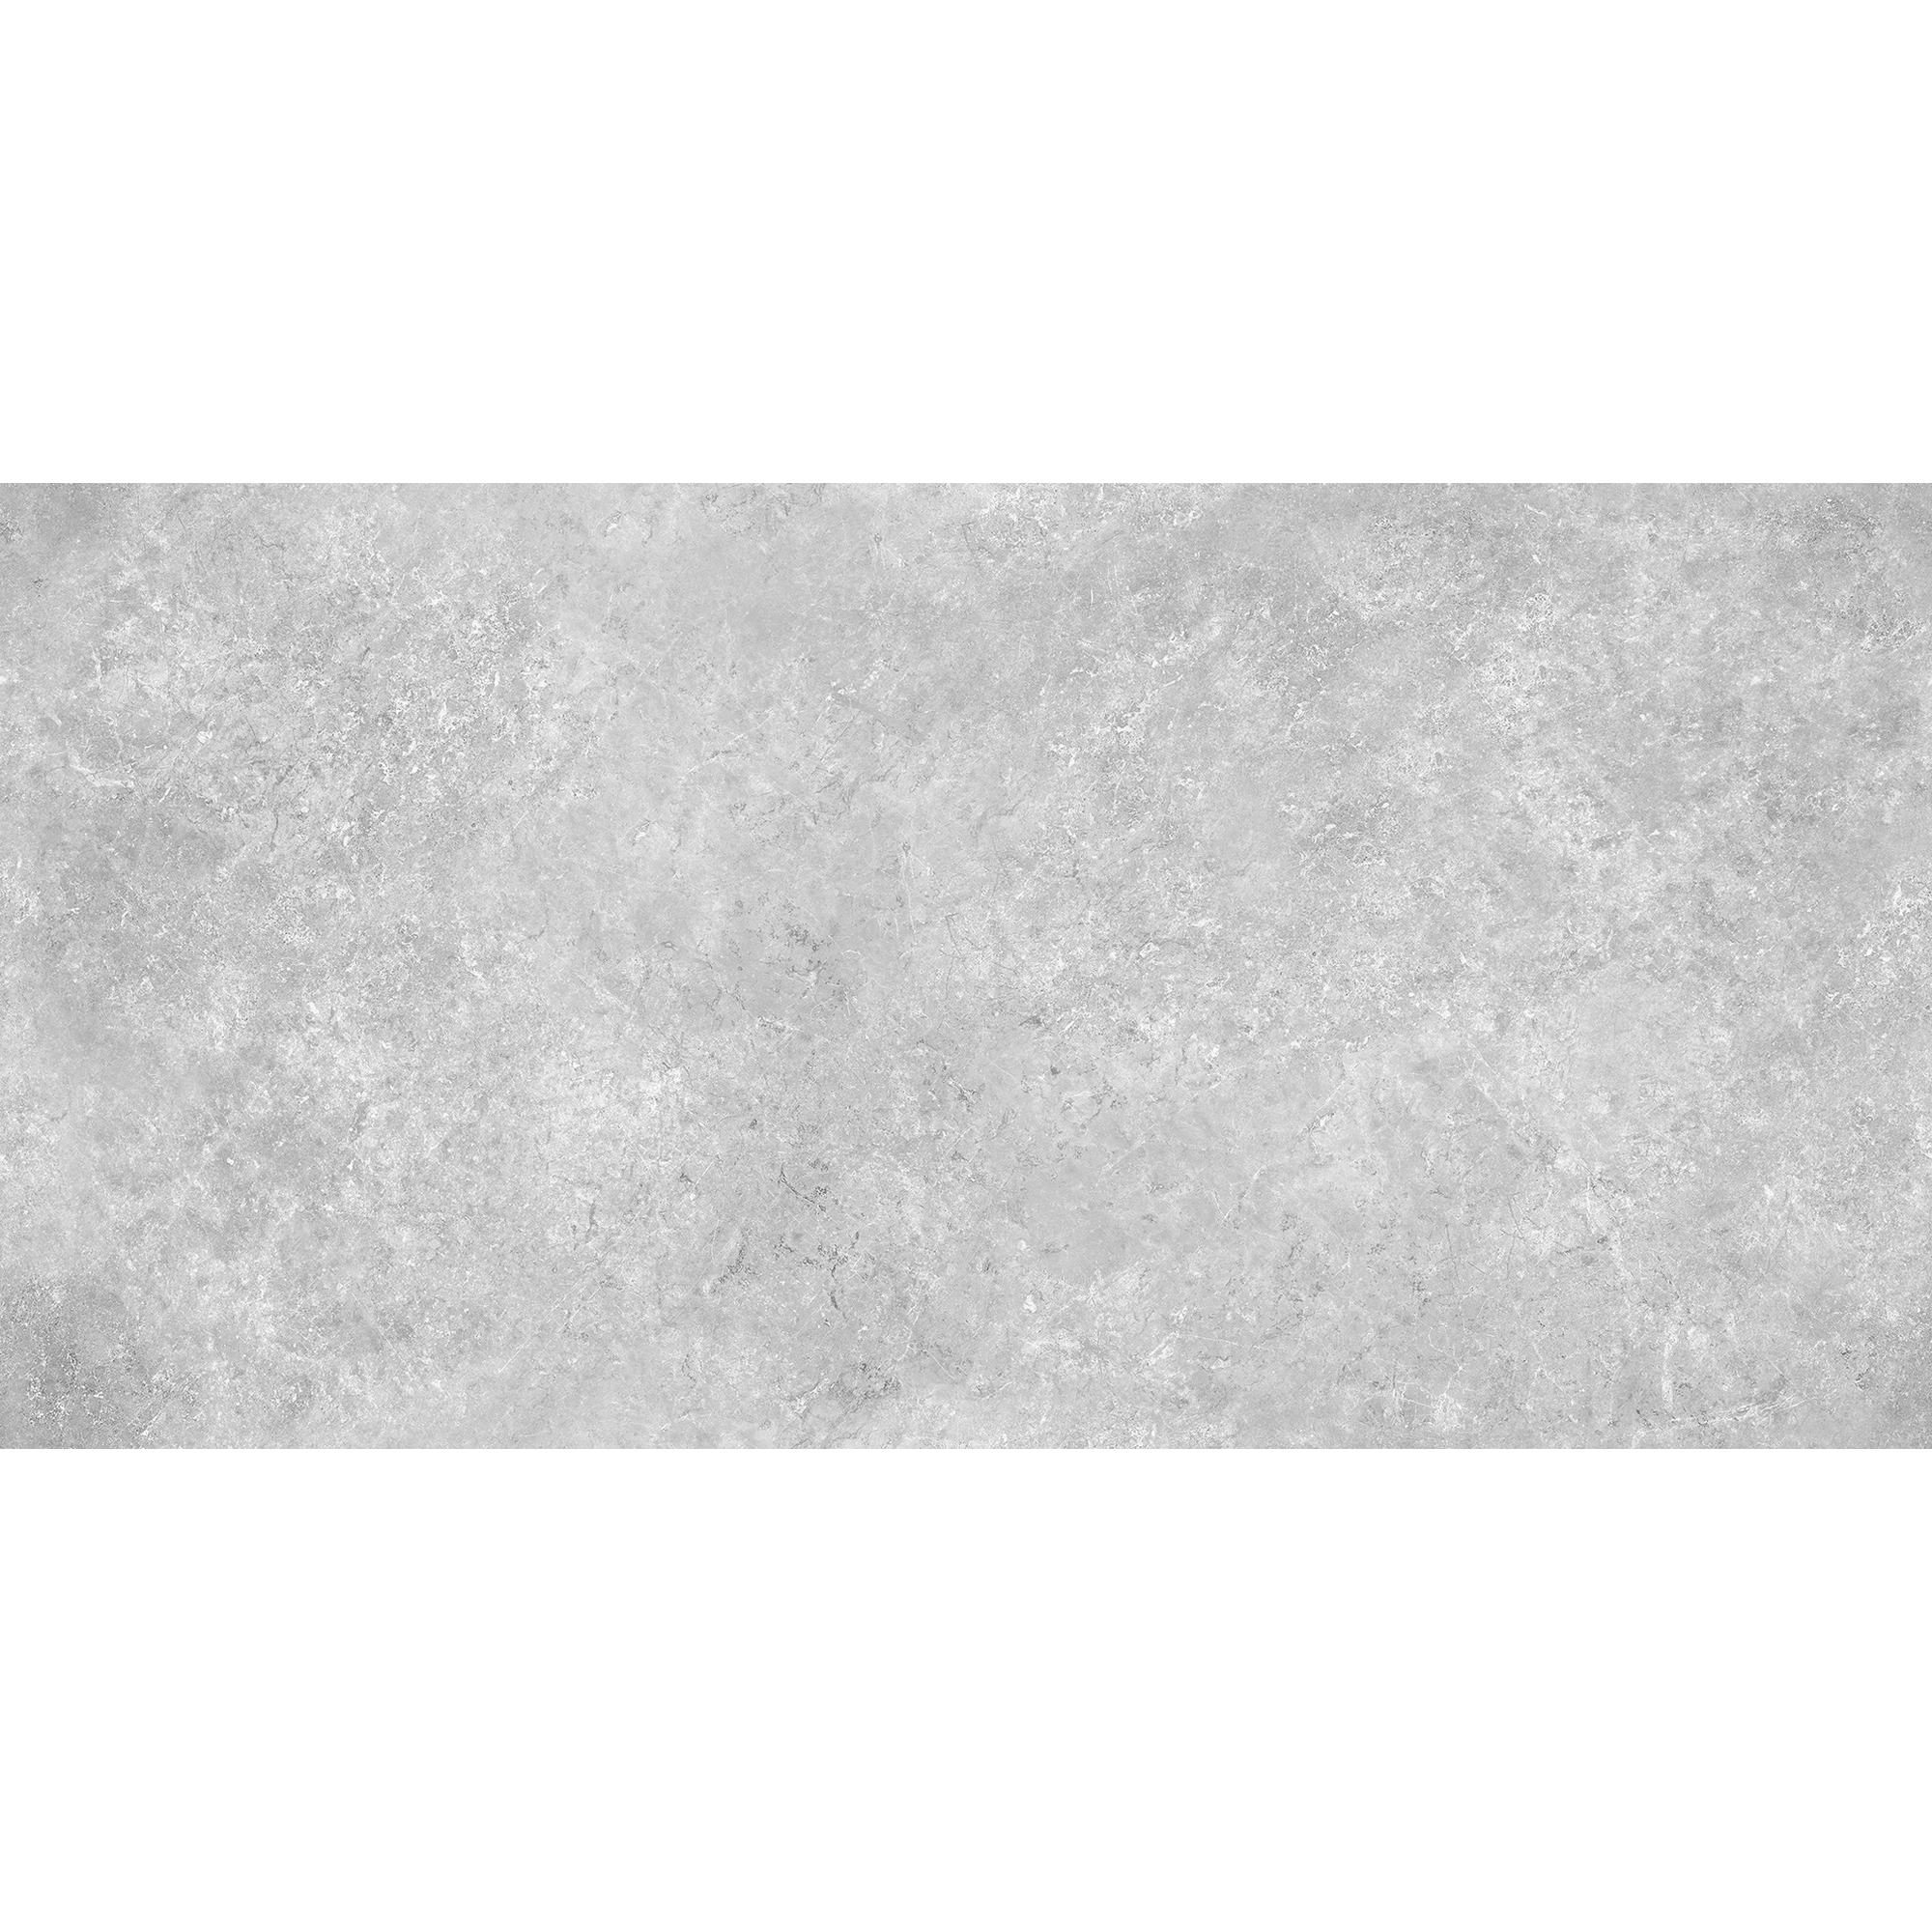 Bodenfliese 'Huston' Feinsteinzeug grau 30 x 60 cm + product picture